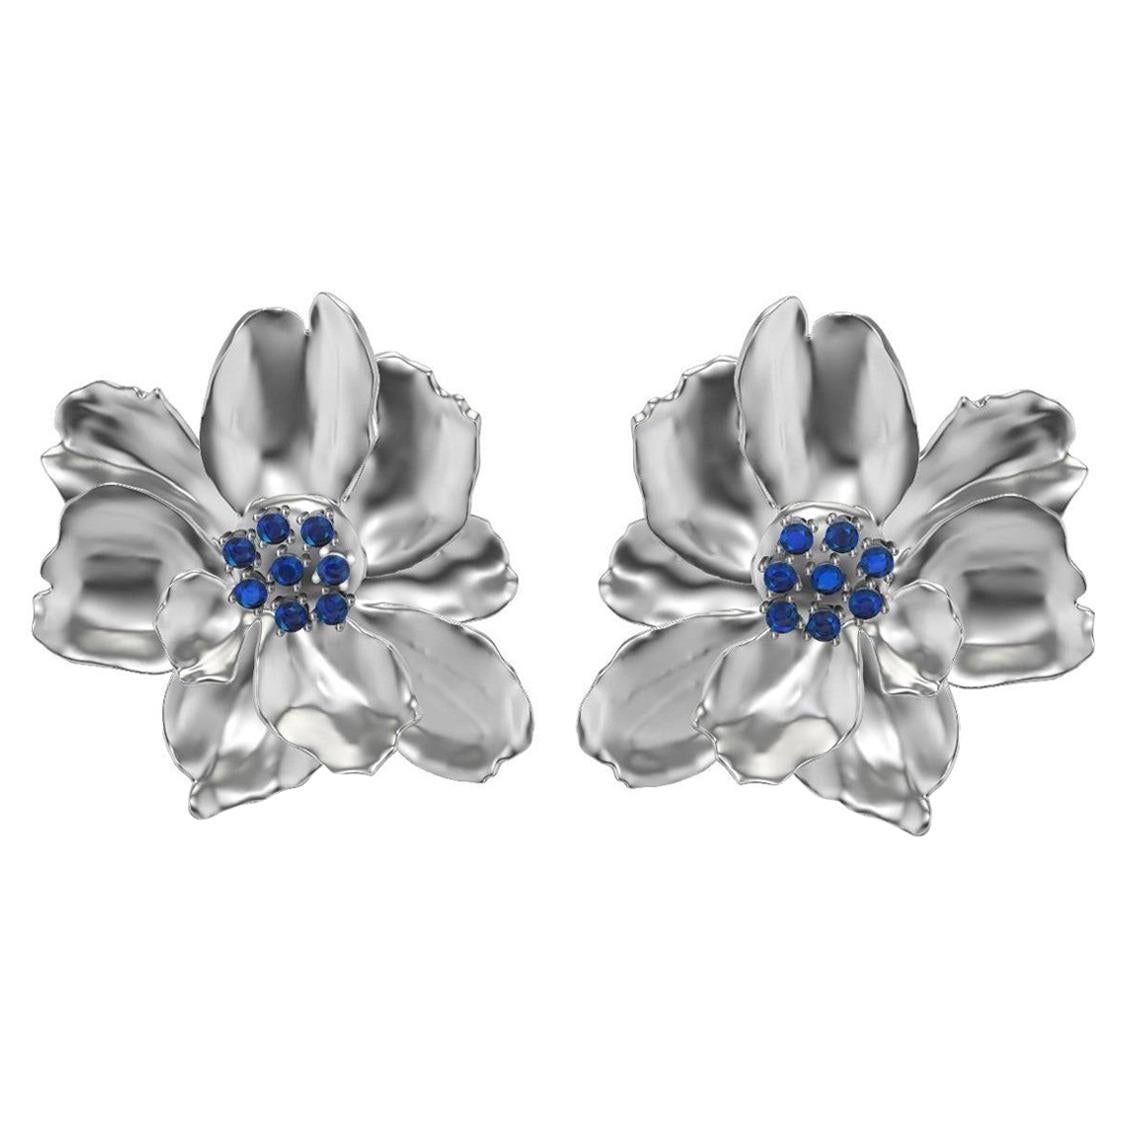 14 Karat White Gold Wild Flower Earrings with Sapphires